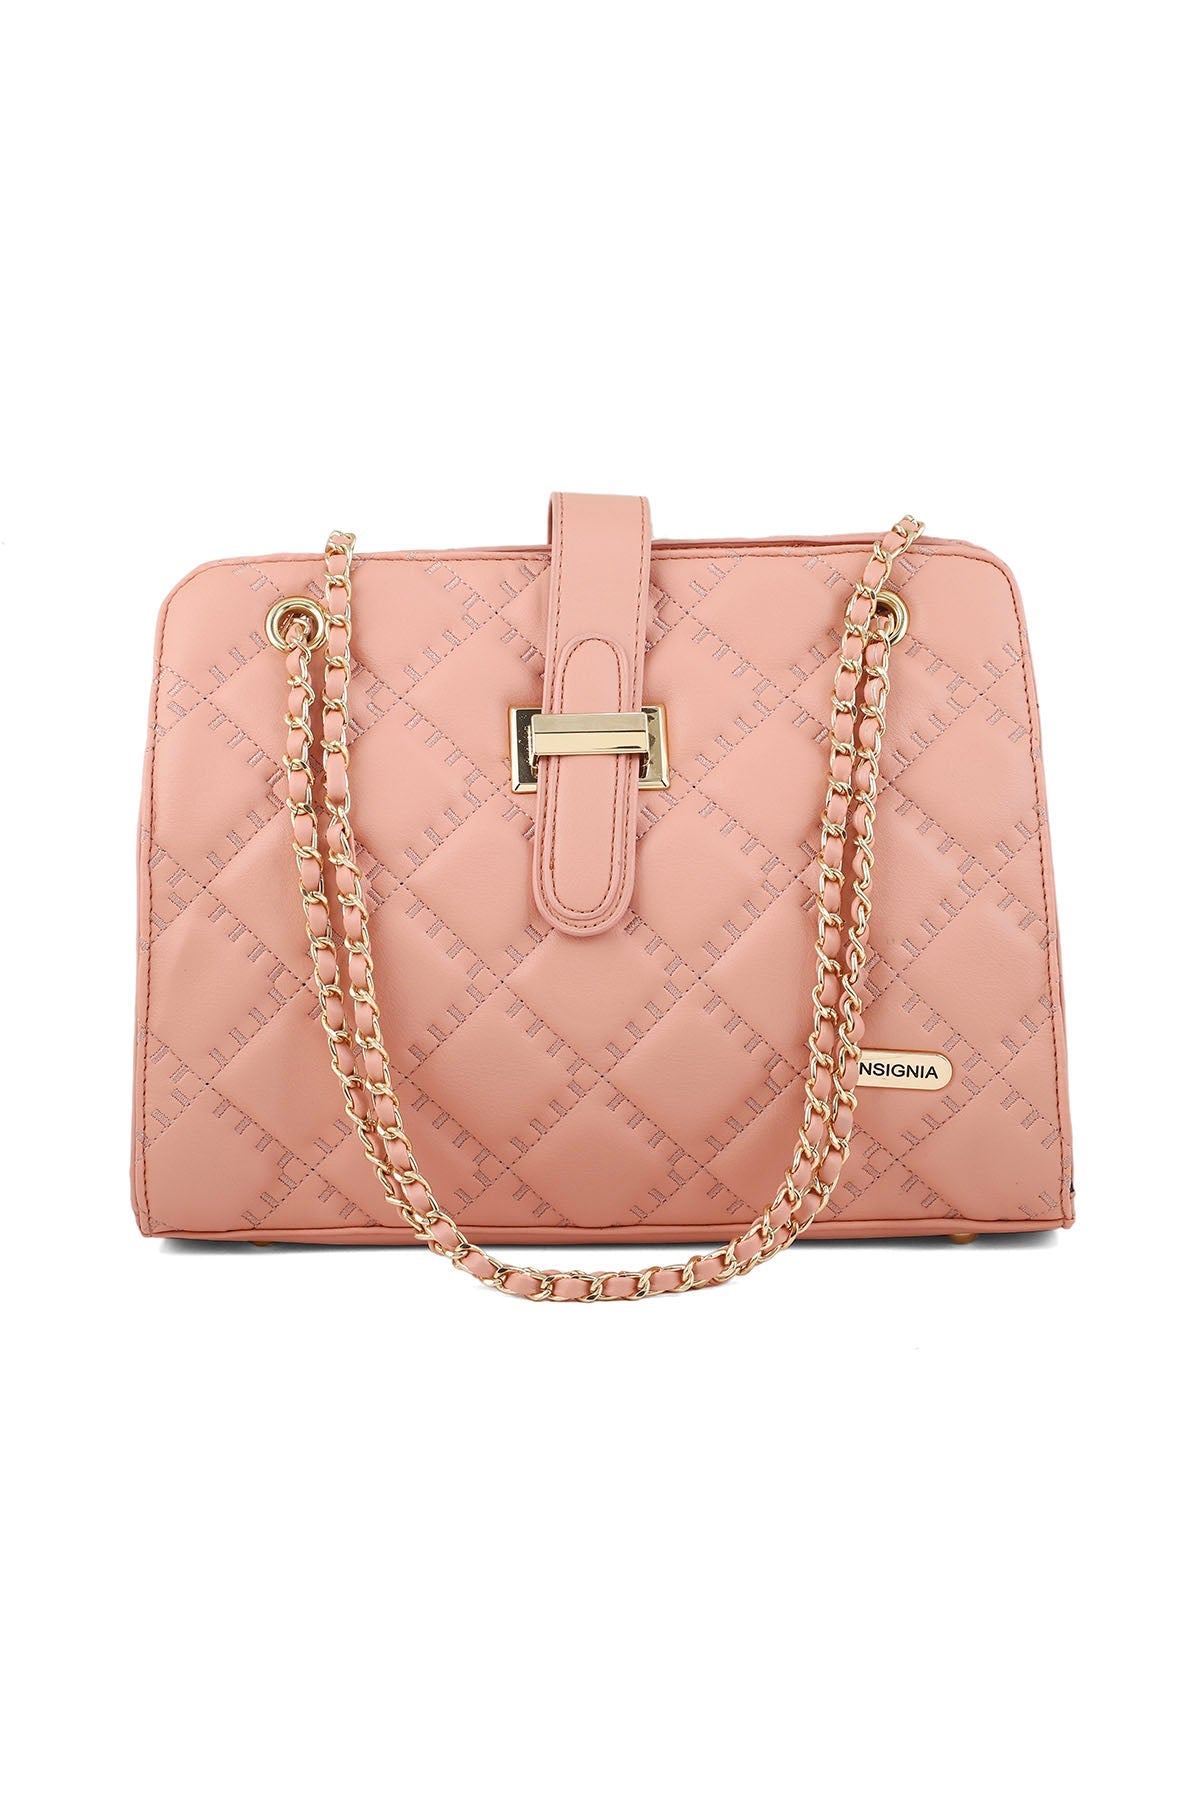 Cross Shoulder Bags B15048-Pink